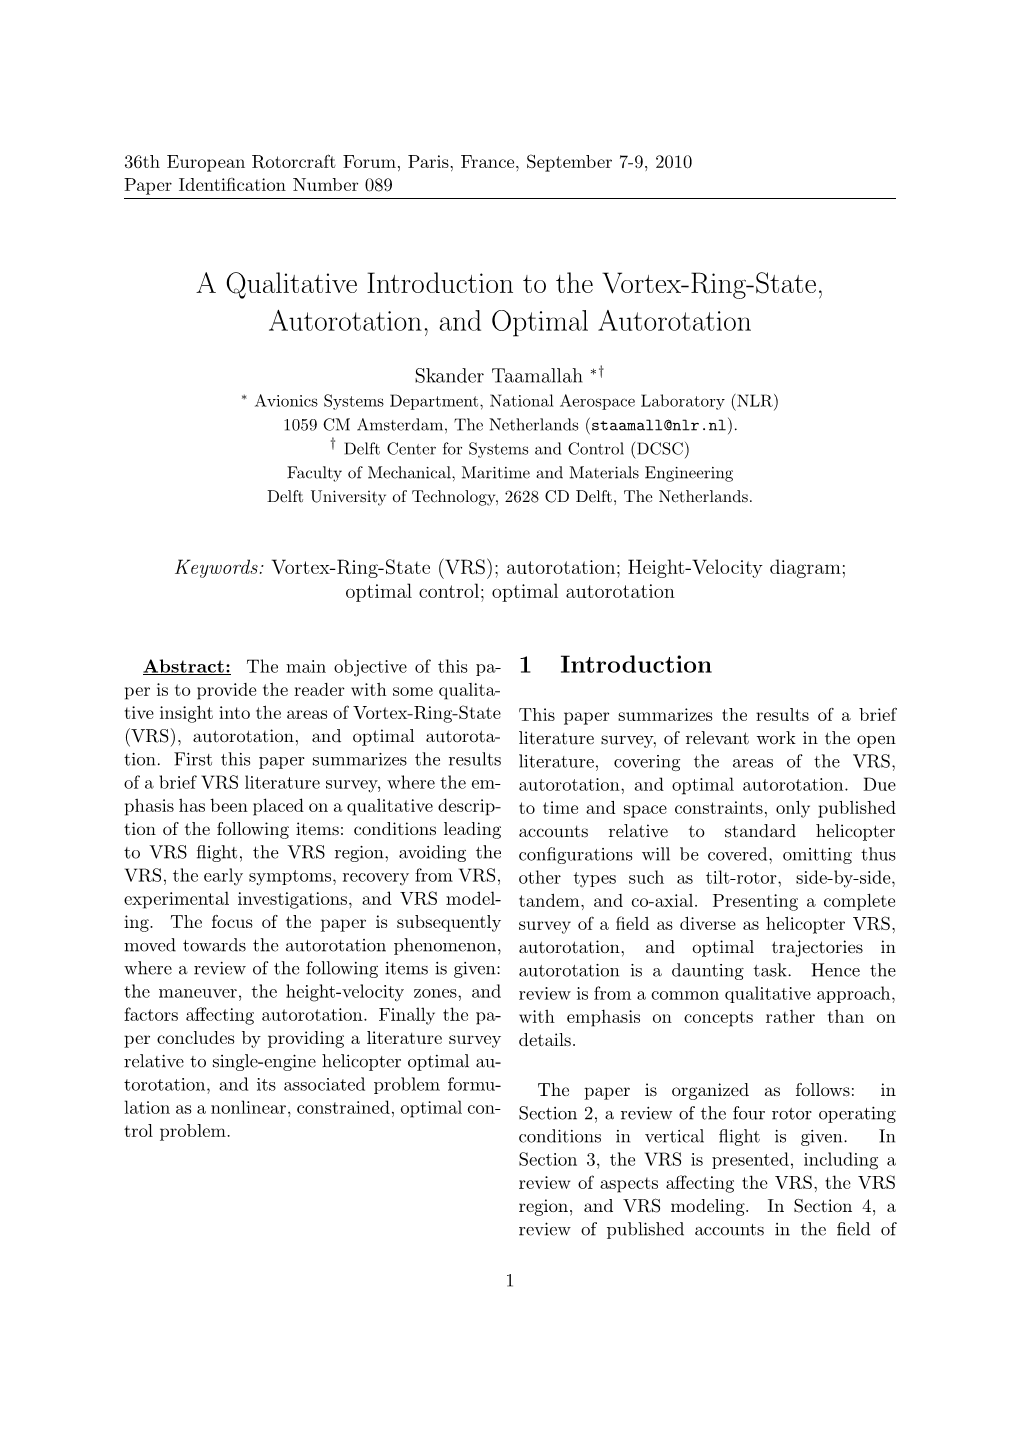 A Qualitative Introduction to the Vortex-Ring-State, Autorotation, and Optimal Autorotation